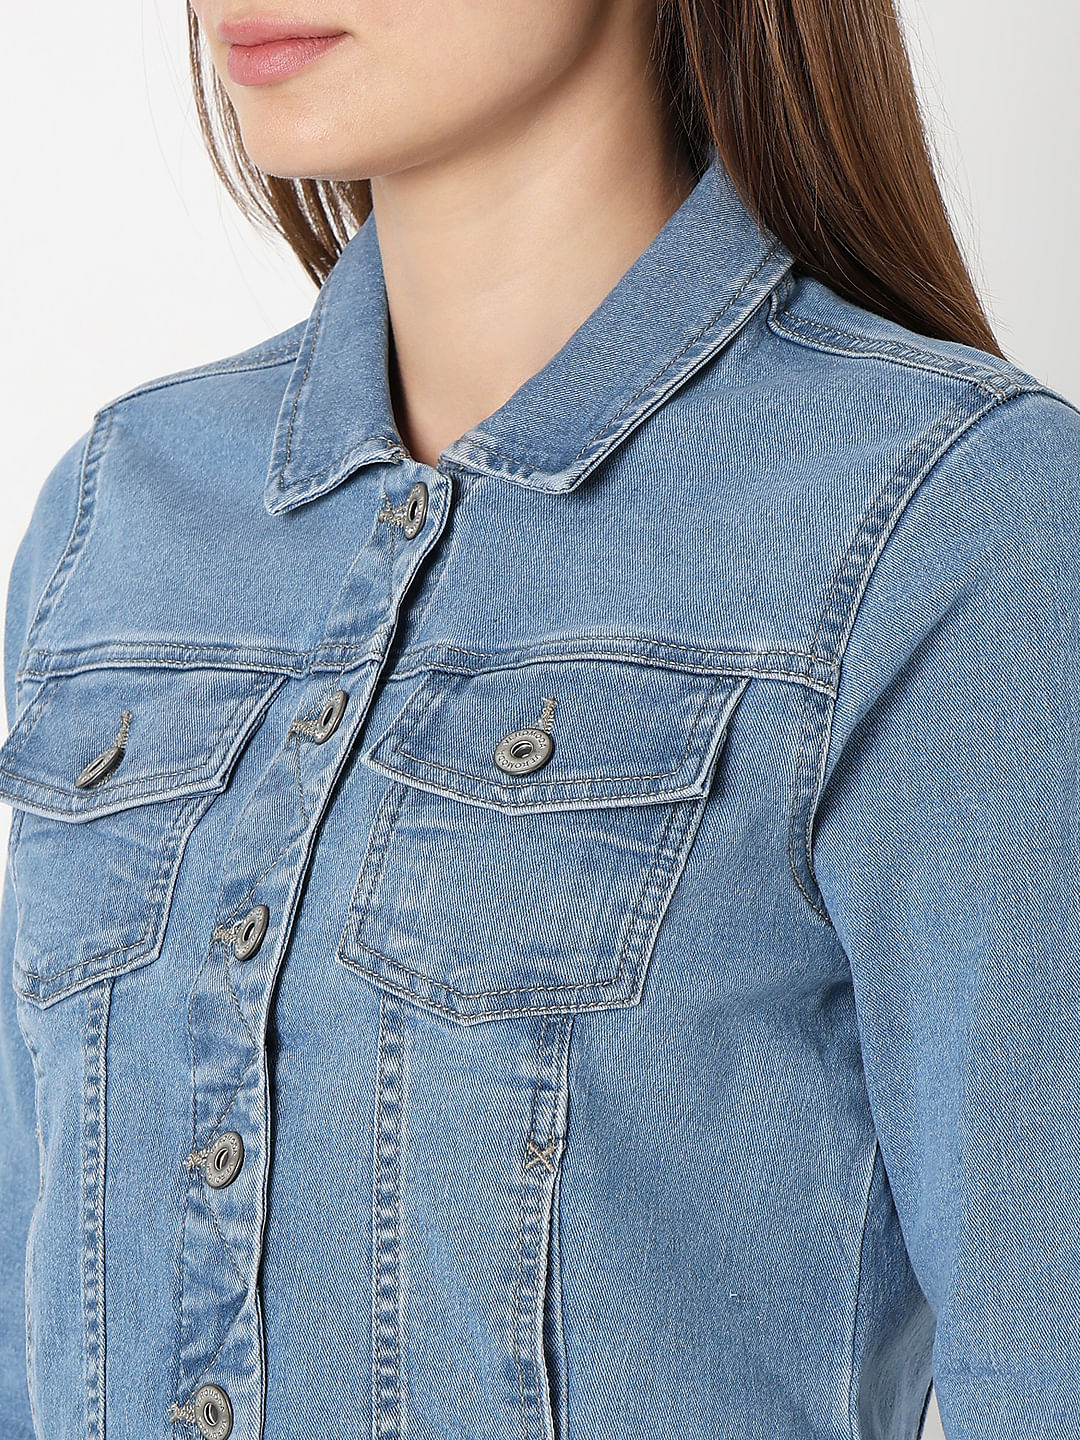 Buy WARDAH Women's Solid Regular Denim Jacket (Light Blue, L) at Amazon.in